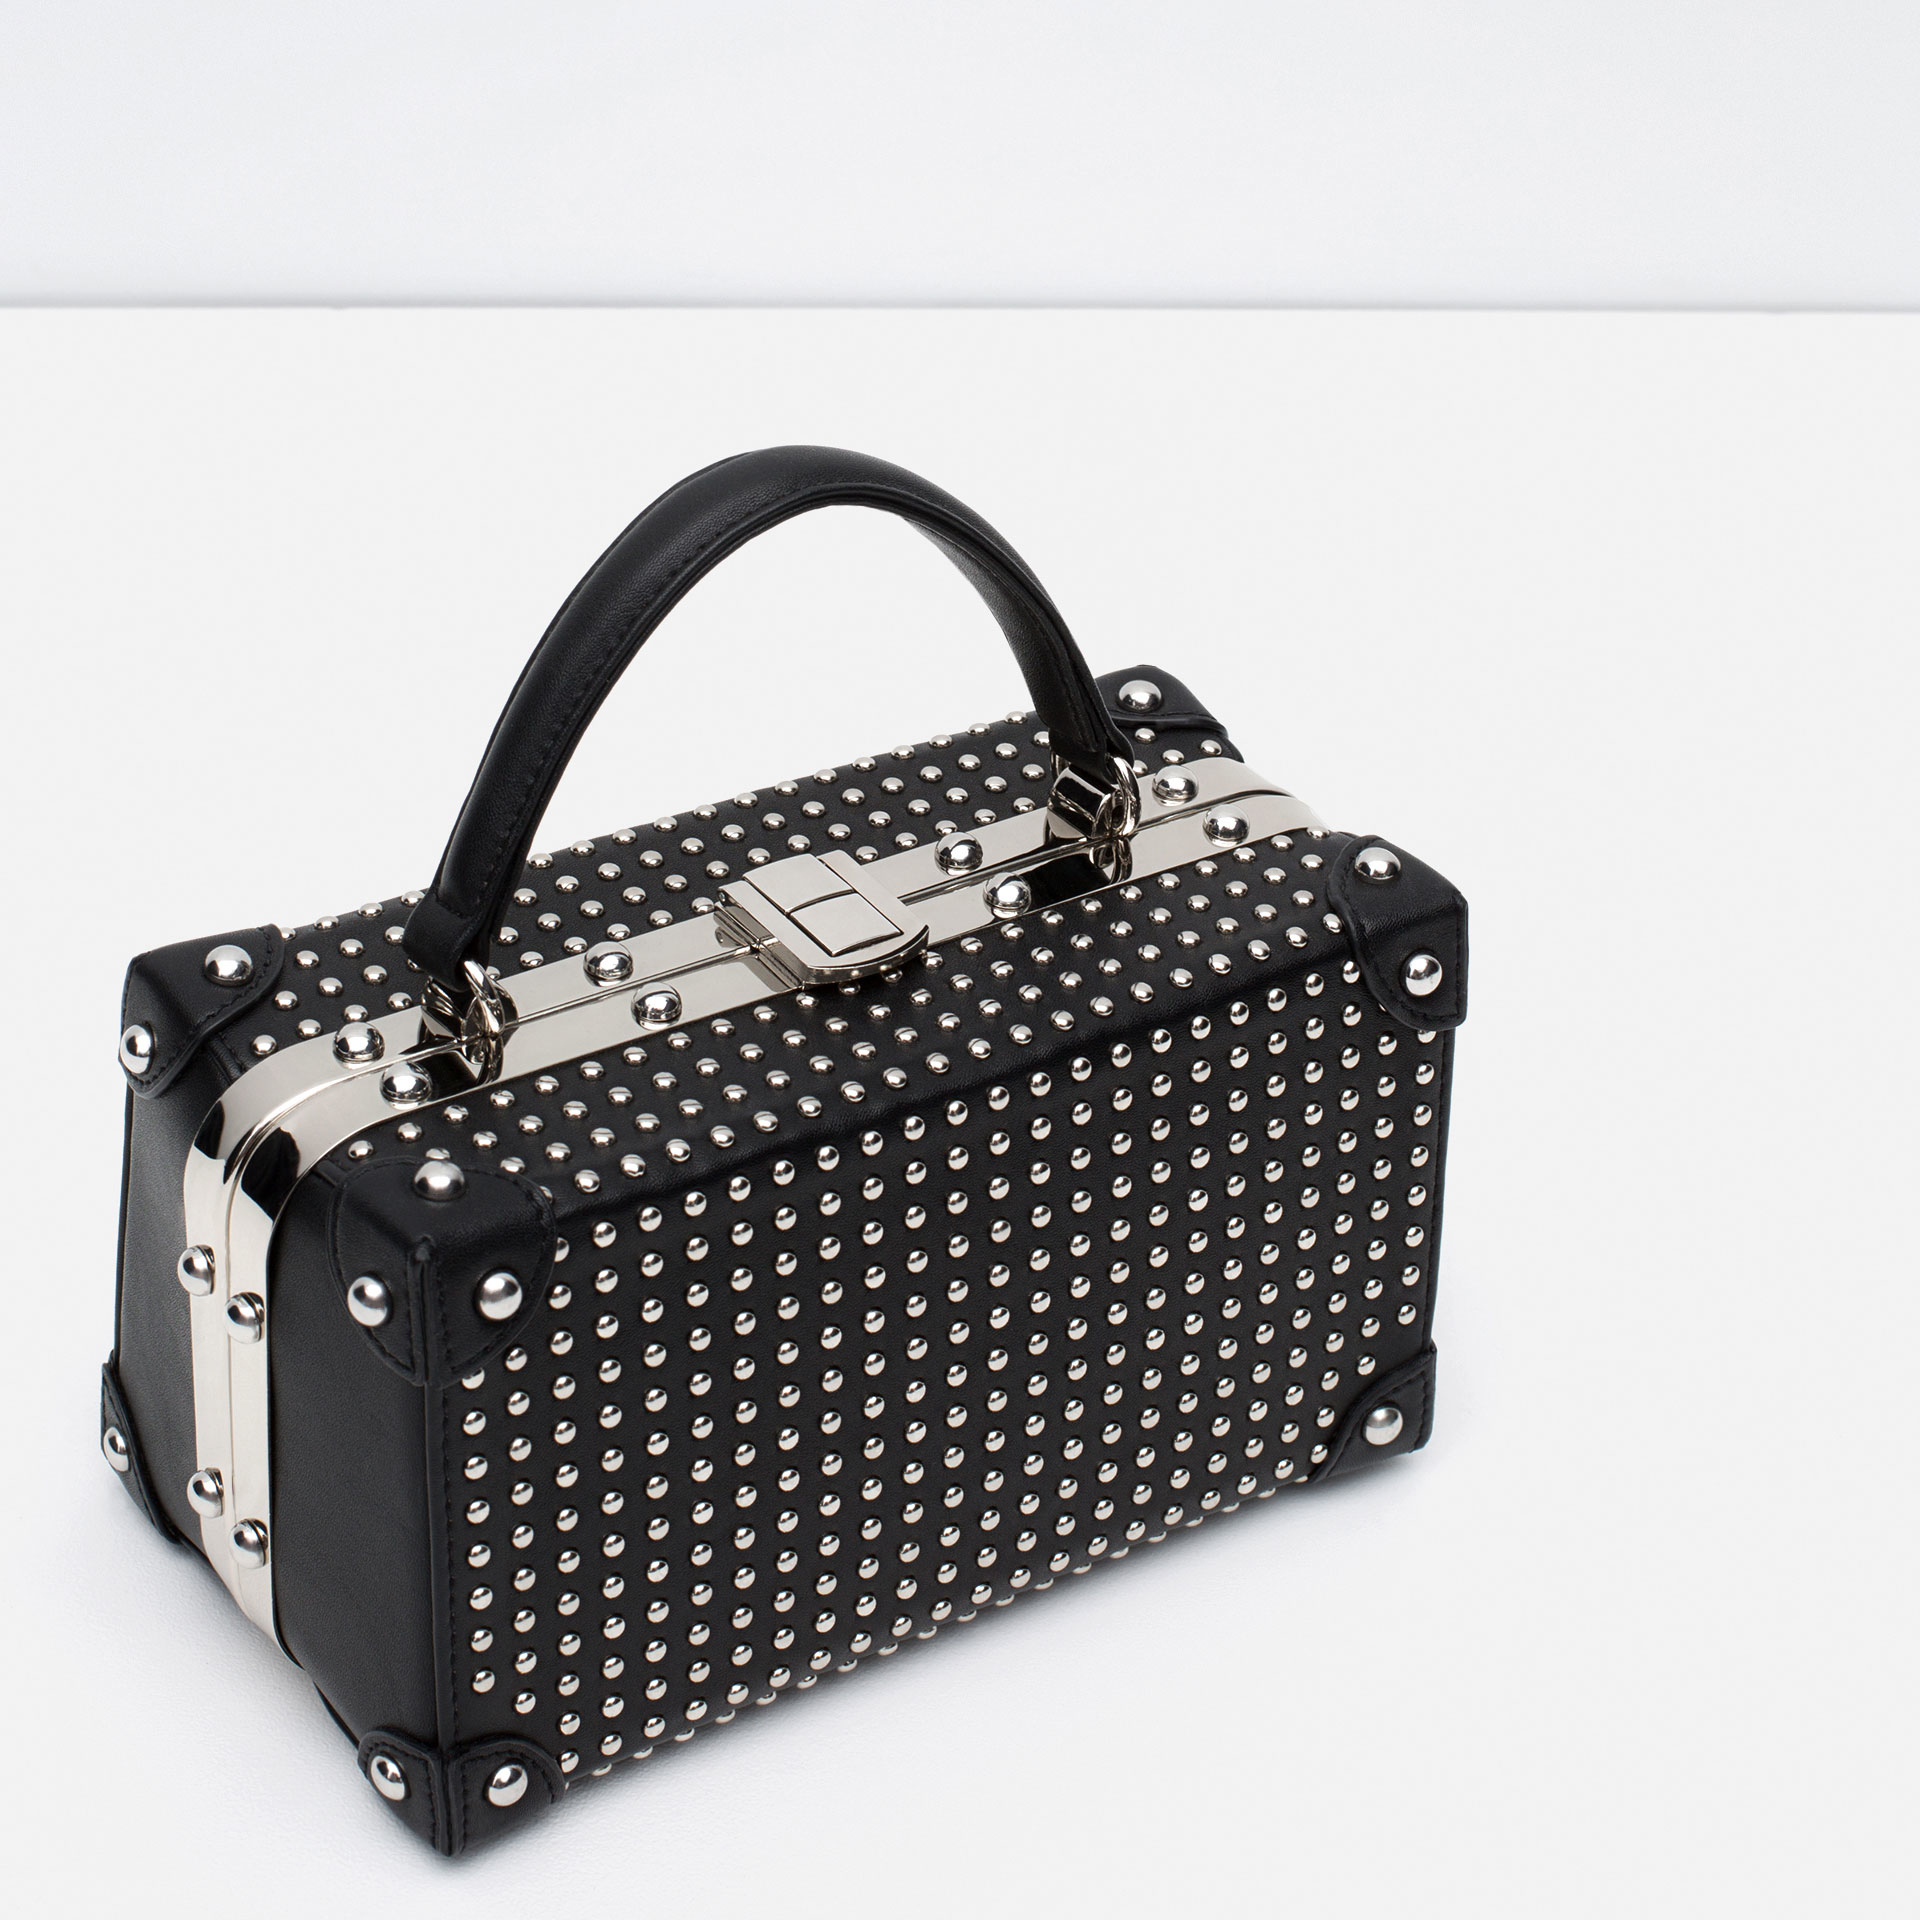 Zara Studded Box Bag in Black | Lyst